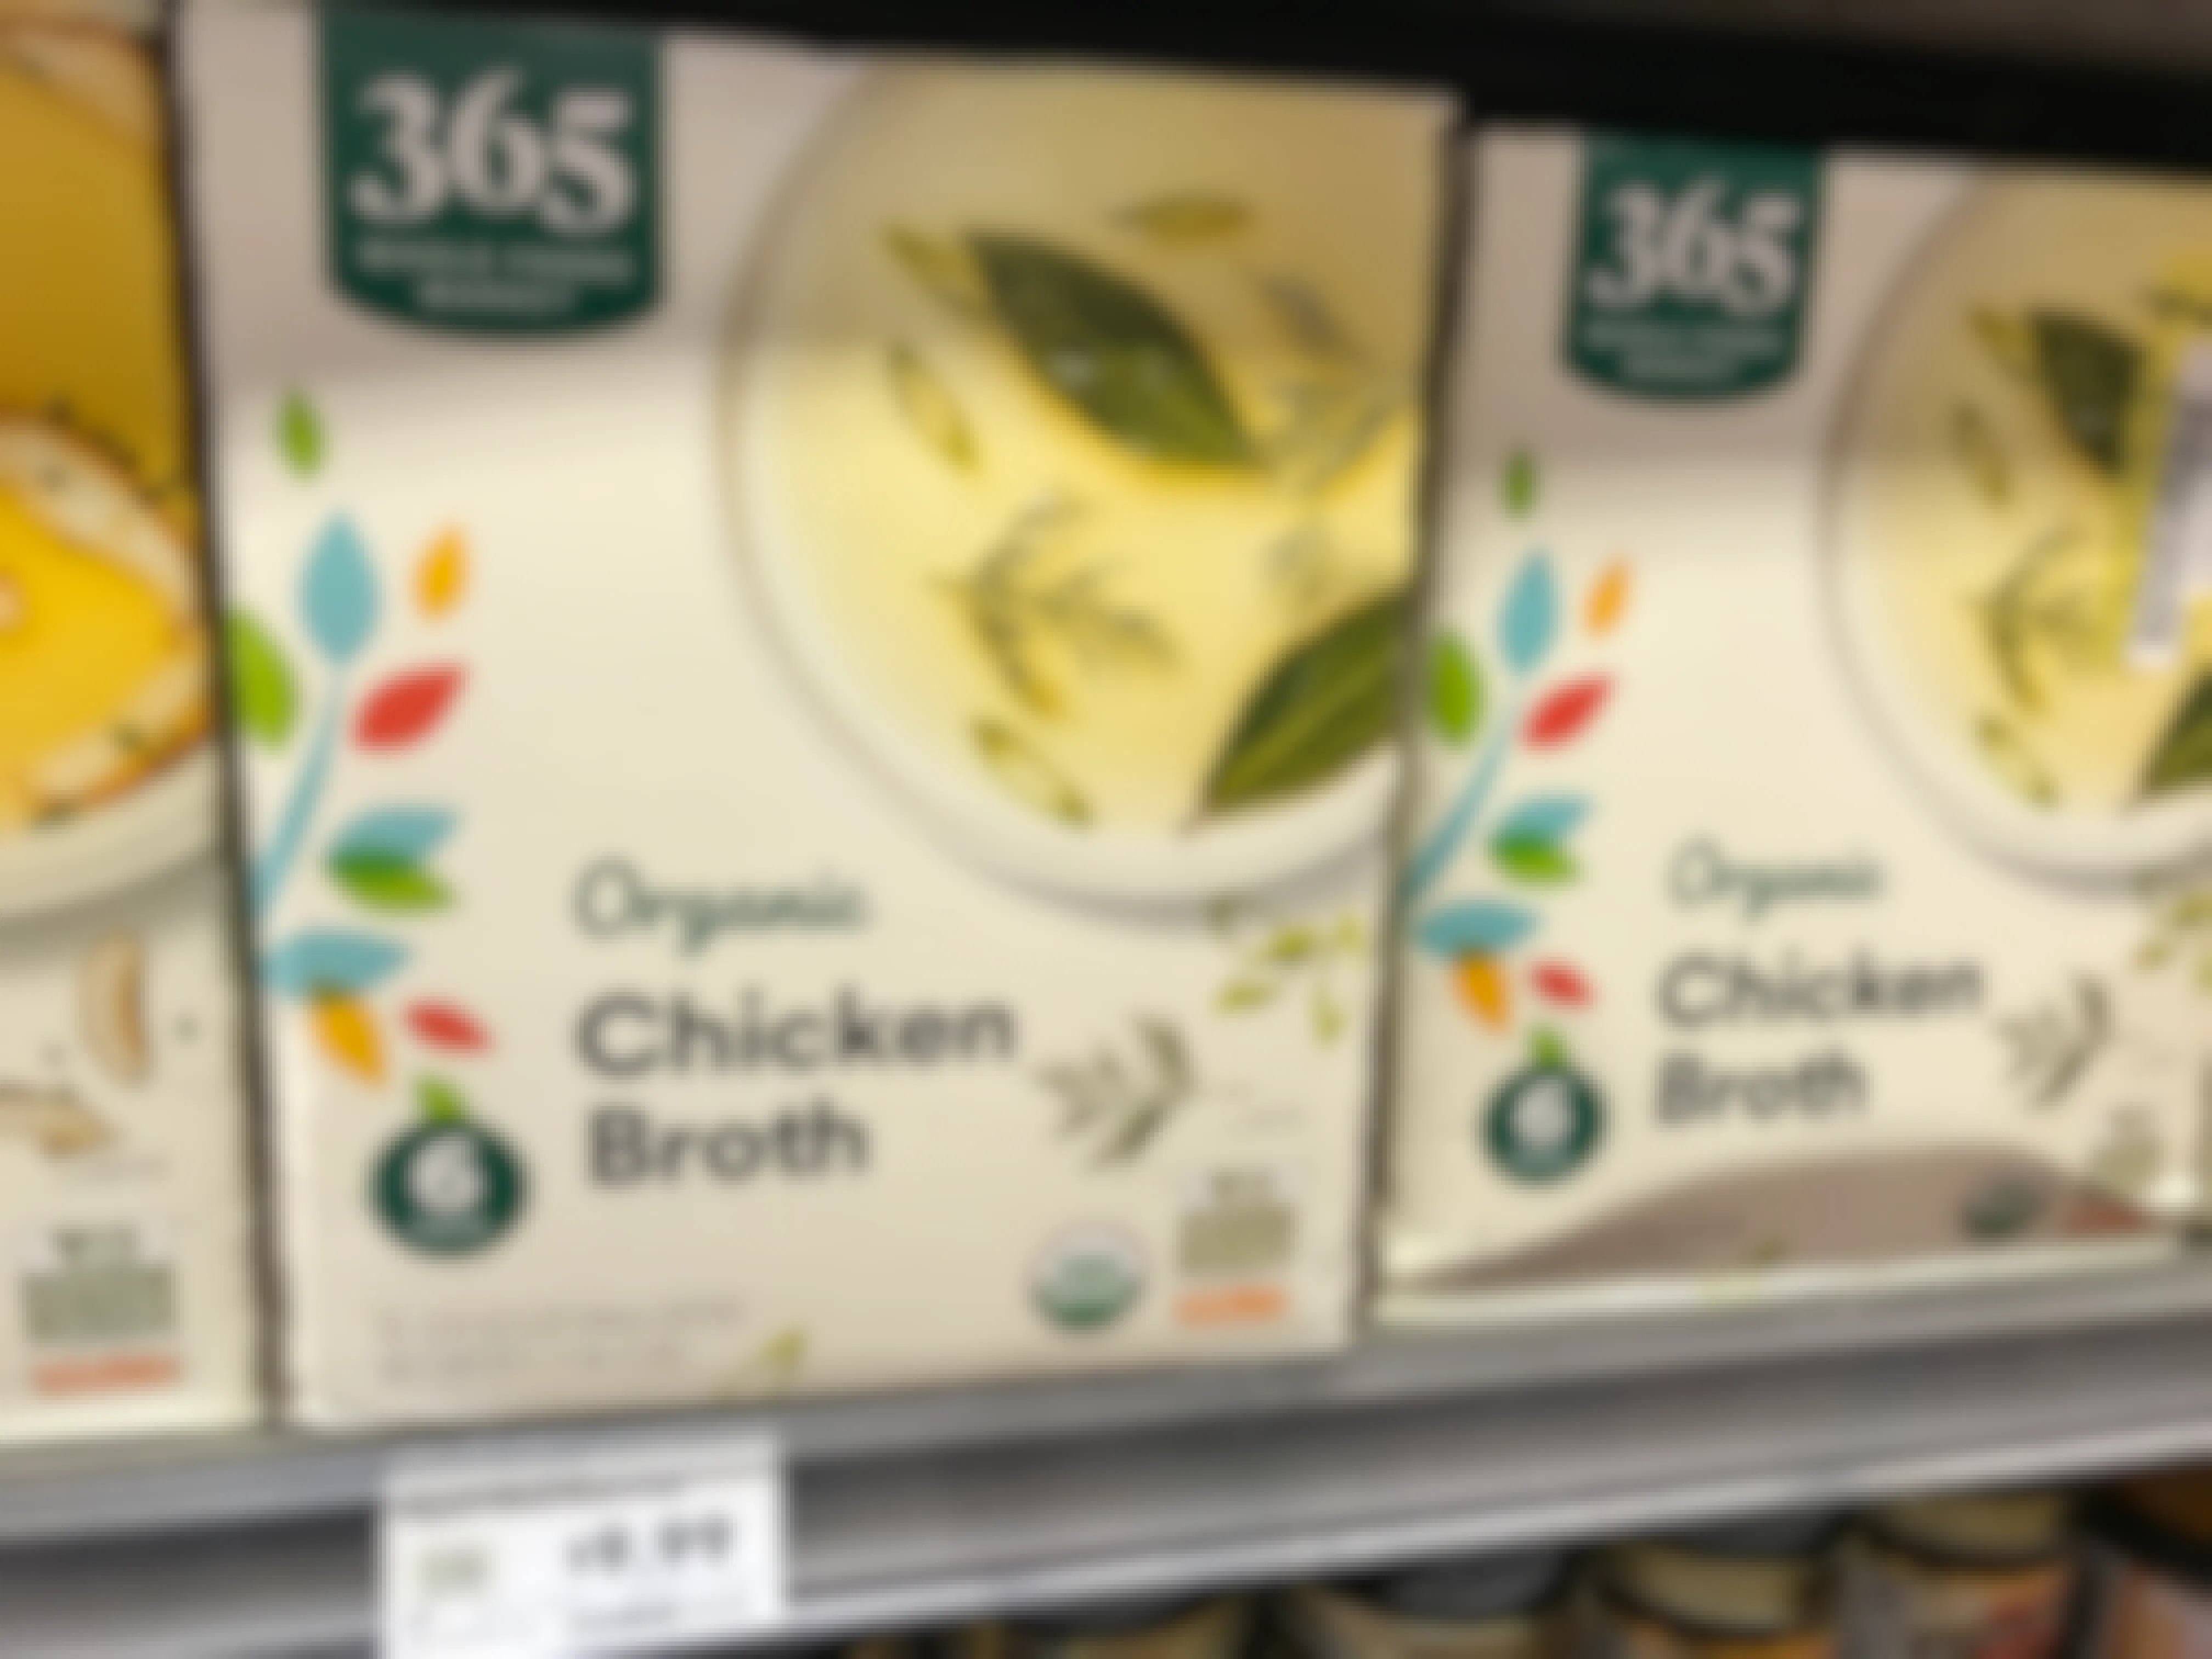 Whole Foods 365 chicken bone broth.